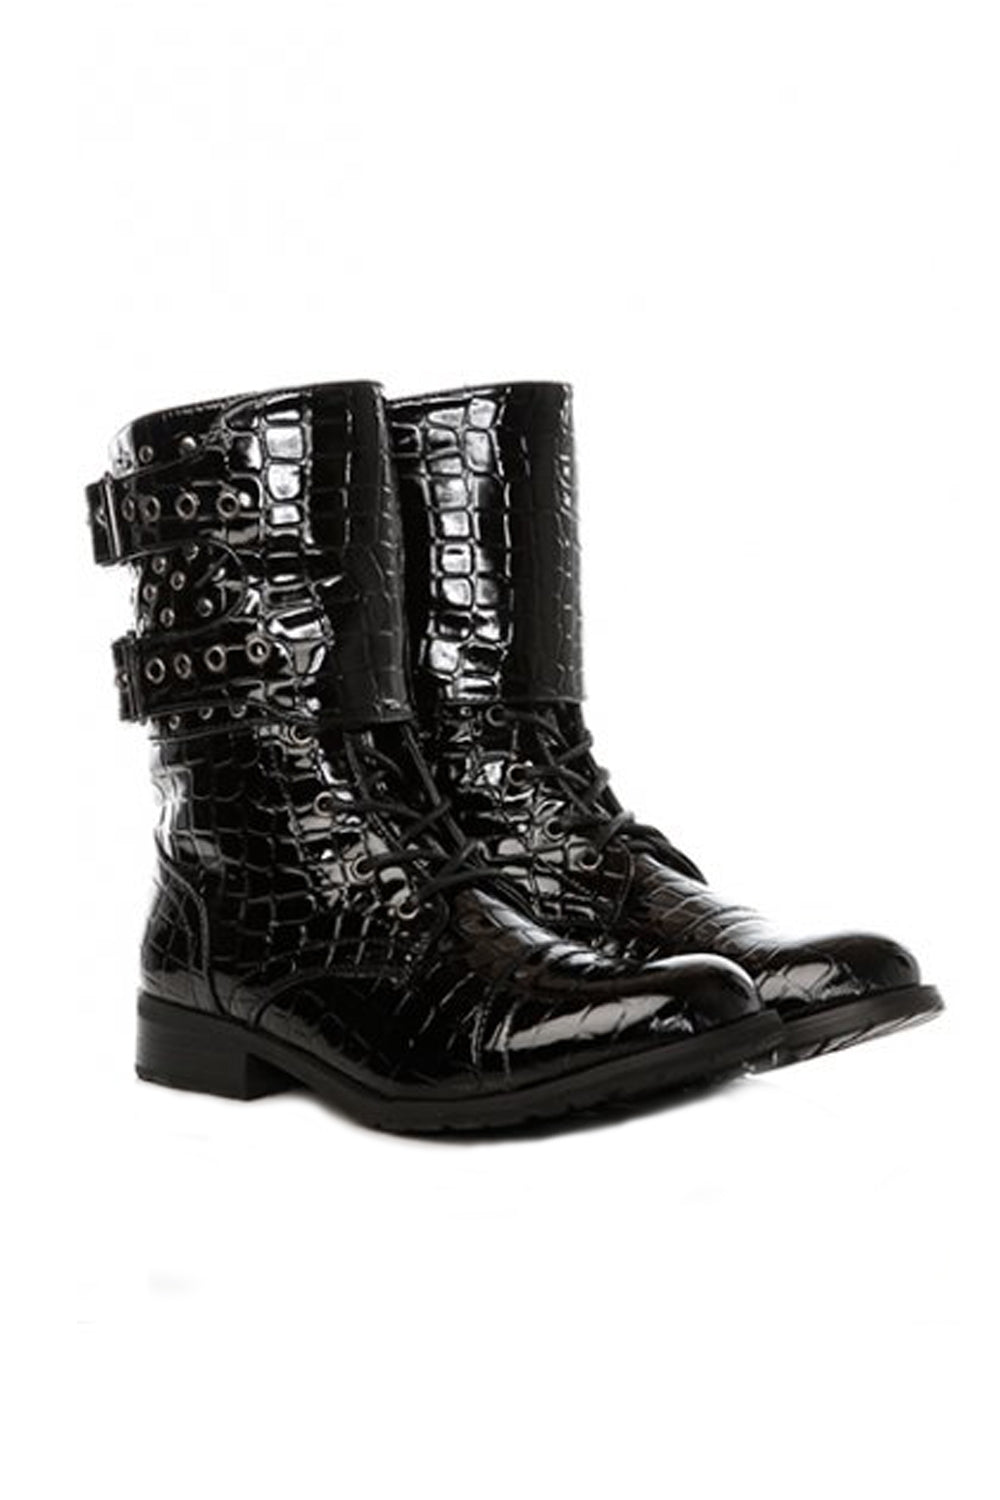 Studded Black Patent Croc Boots